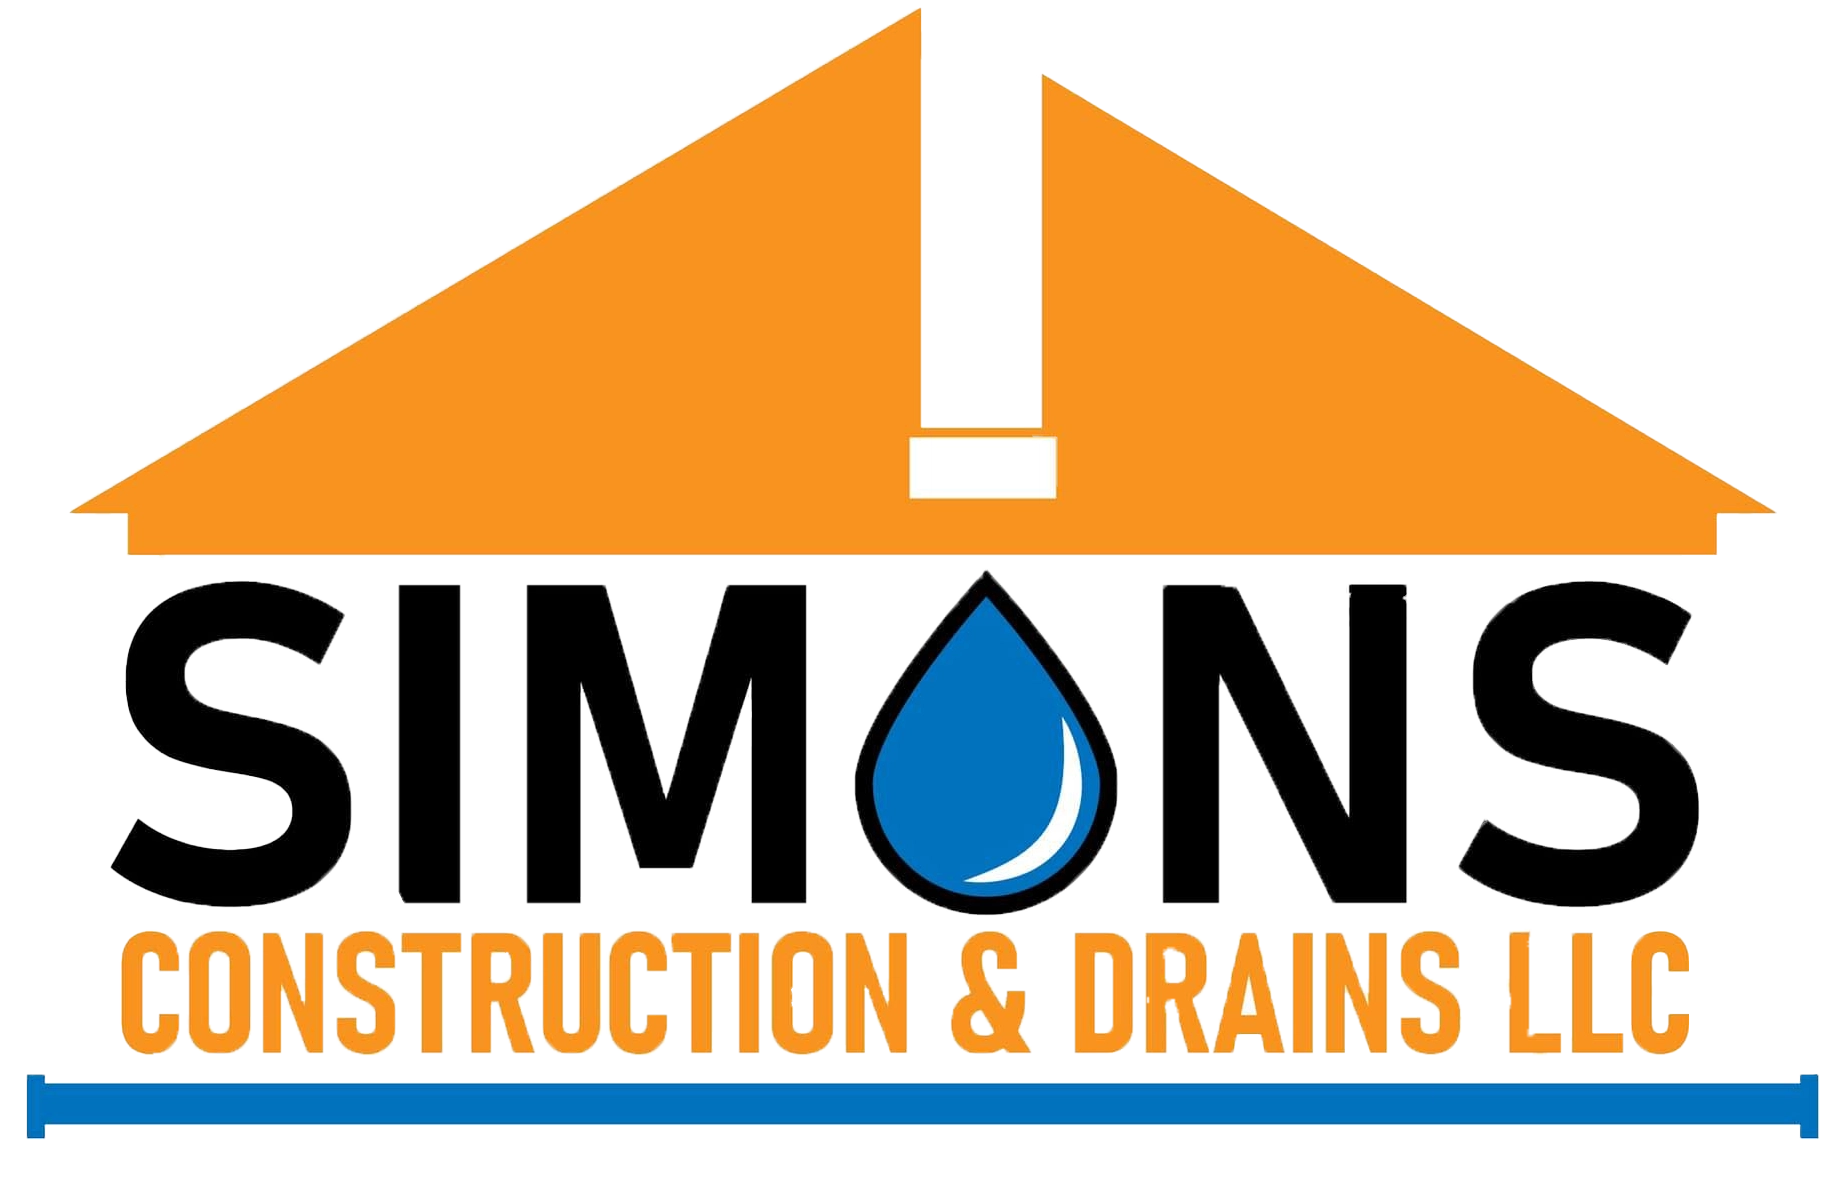 Simons Construction and Drains, a plumbing company Logo